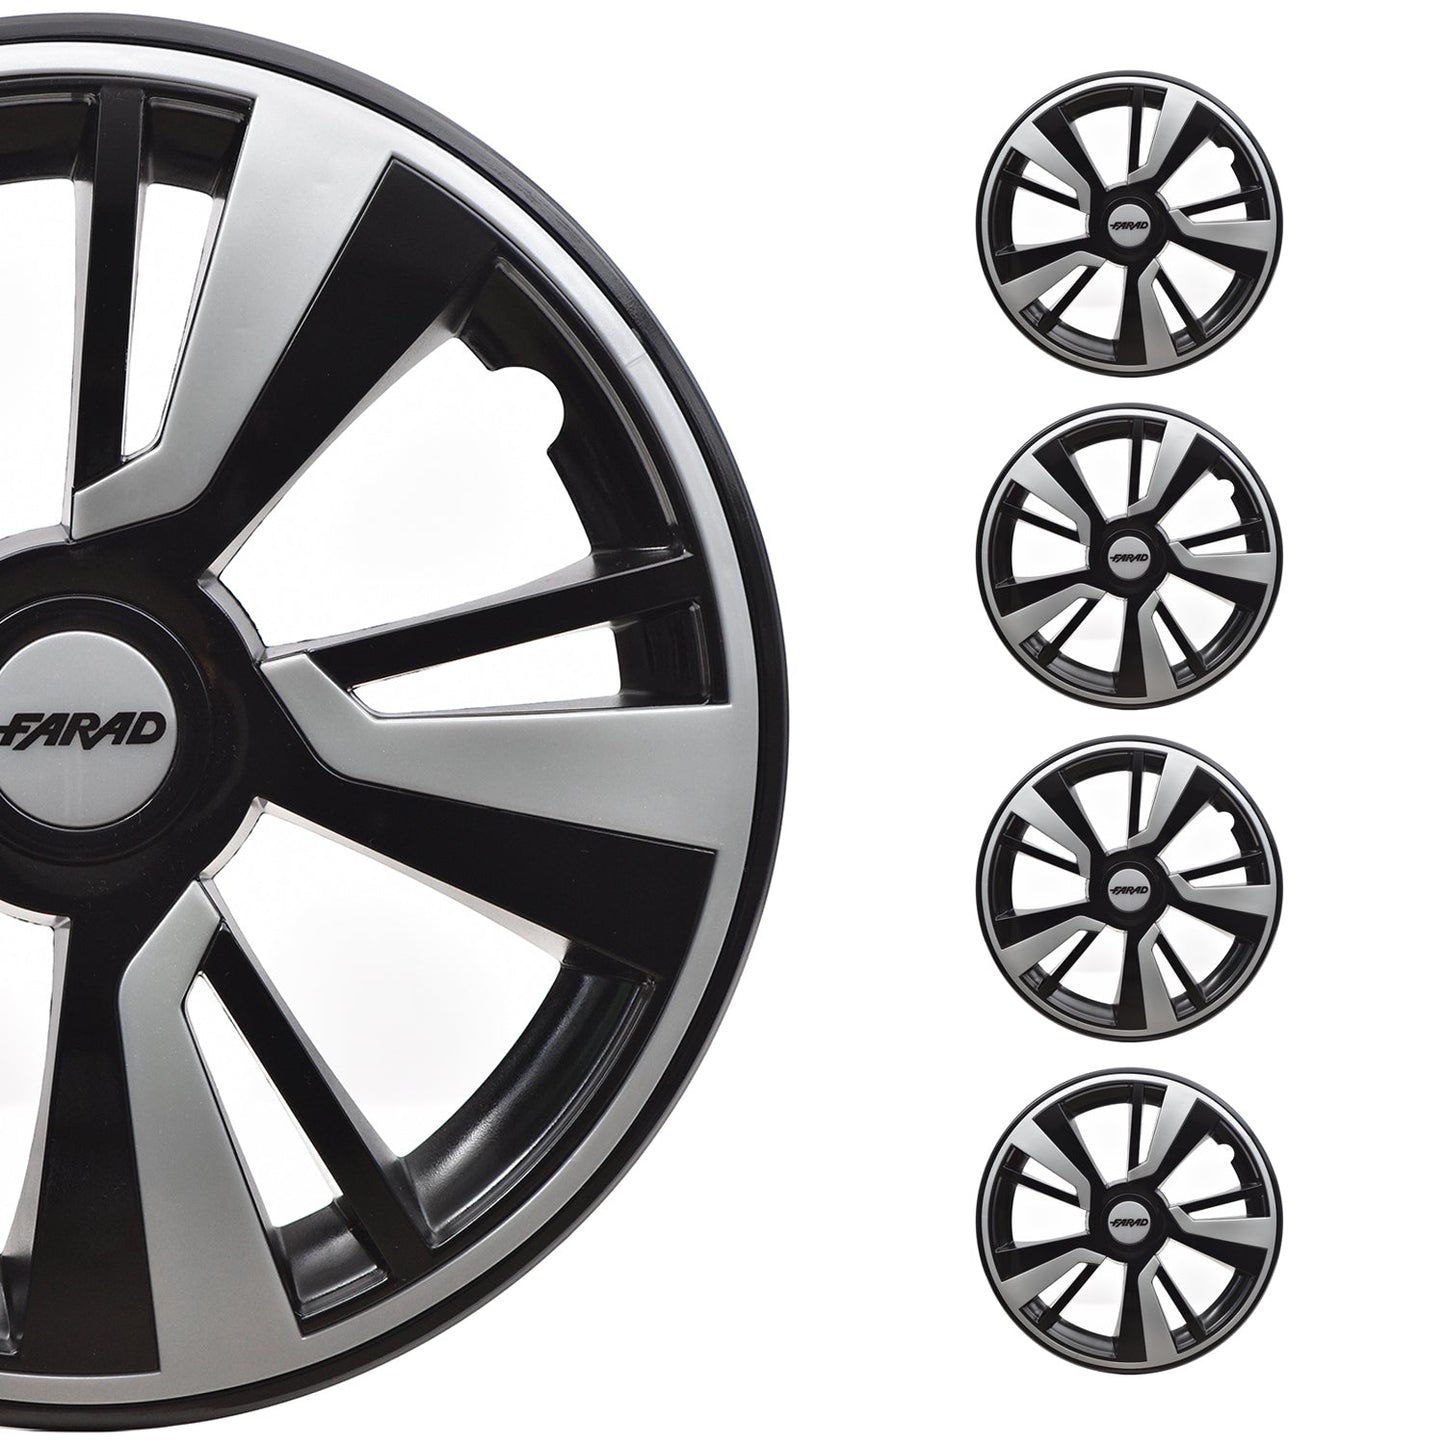 OMAC 15" Hubcaps Wheel Rim Cover Black with Light Grey Insert 4pcs Set VRT99FR243B15LG